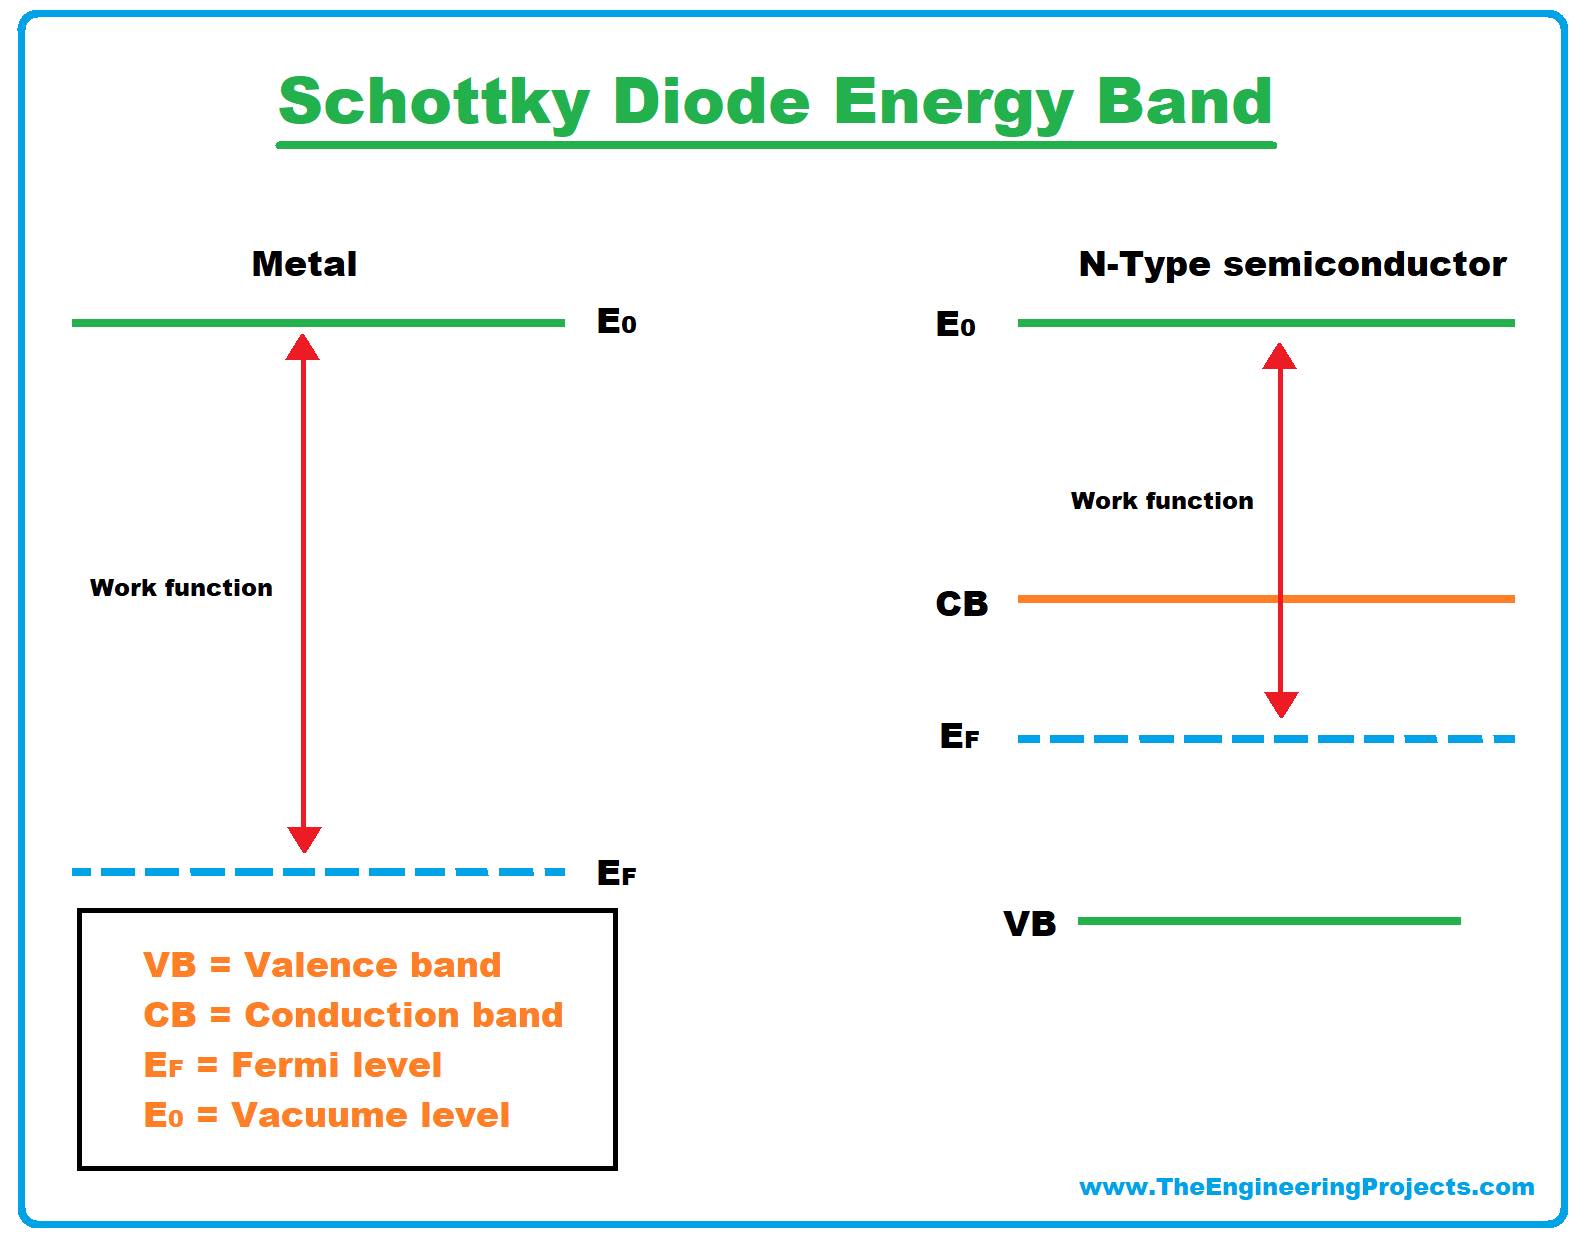 Schottky Diode, Schottky barrier diode, Schottky barrier, Schottky Diode working, Schottky Diode energy bands, energy bands of schottky diode, Schottky Diode characteristics